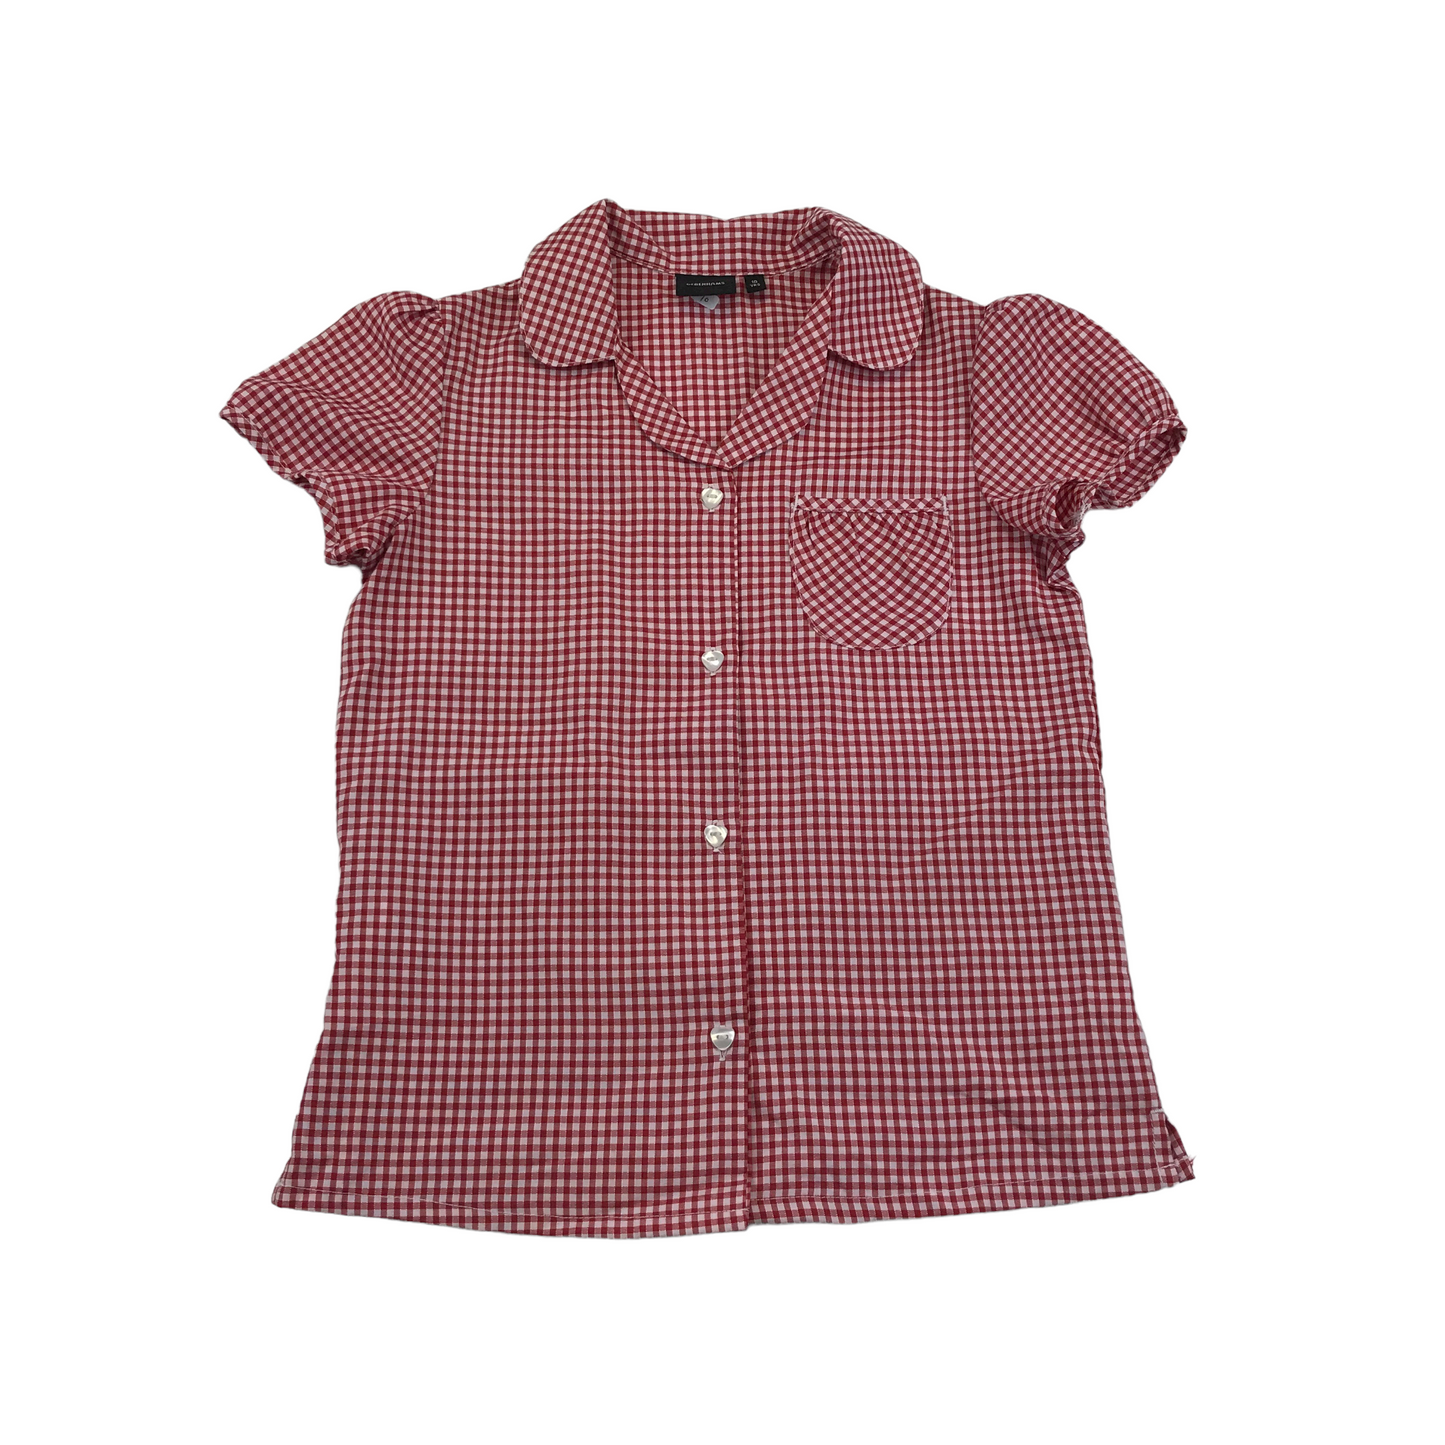 Debenhams Red Gingham Summer School Short Sleeve Shirt Age 10